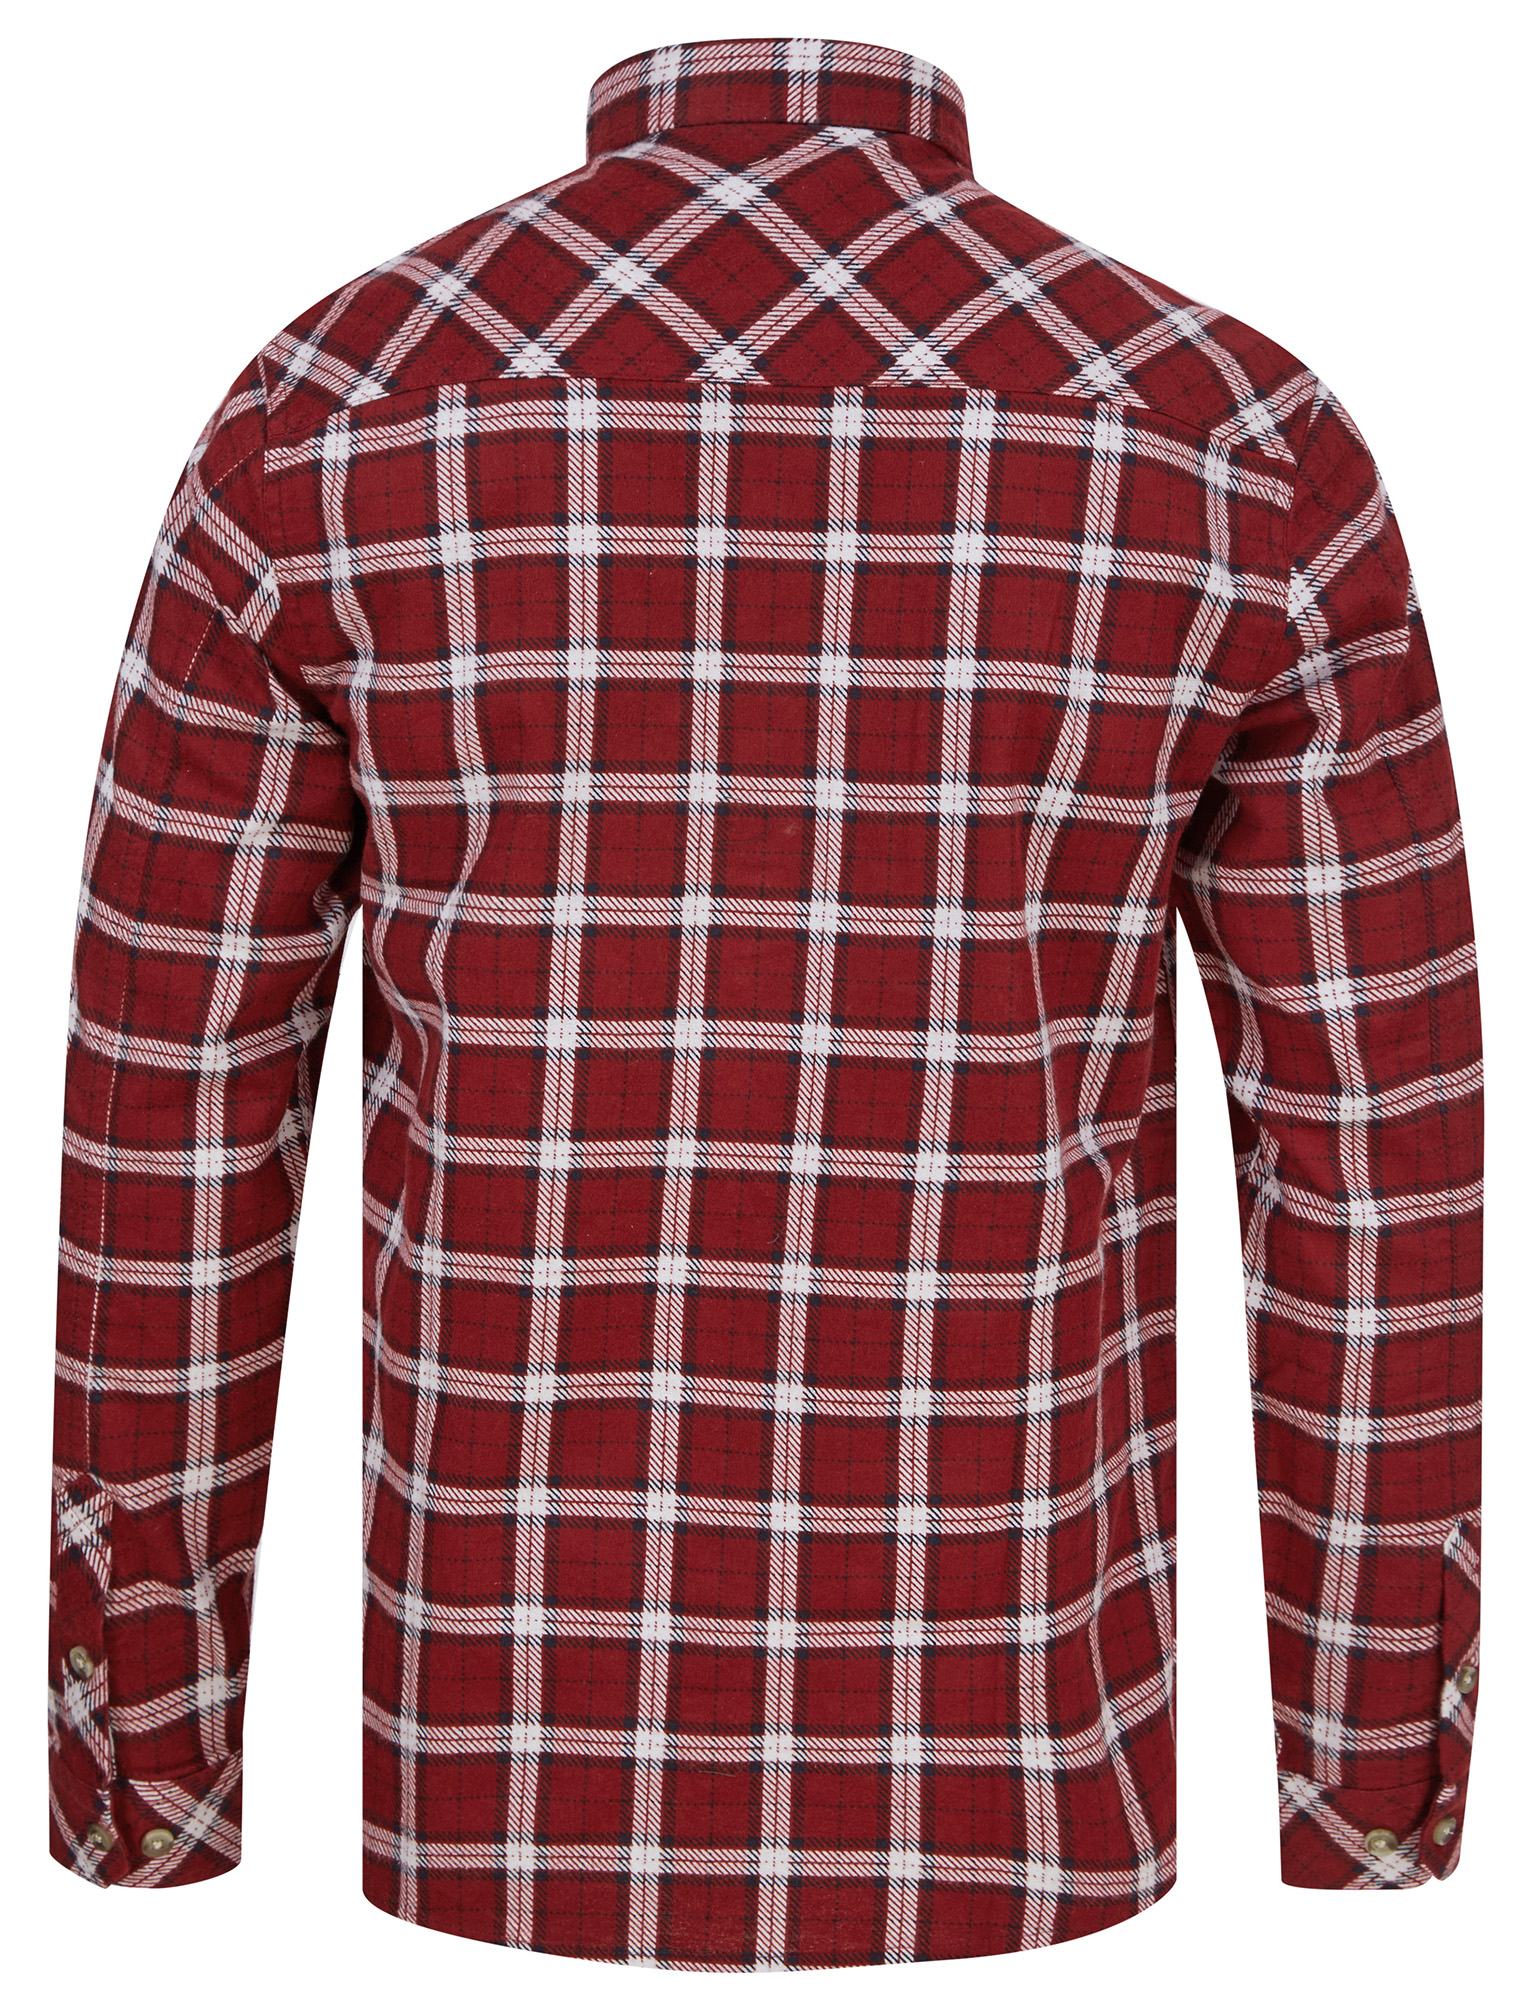 Tokyo Laundry Men's Shirt Check Checked Lumberjack 100% Cotton Flannel ...